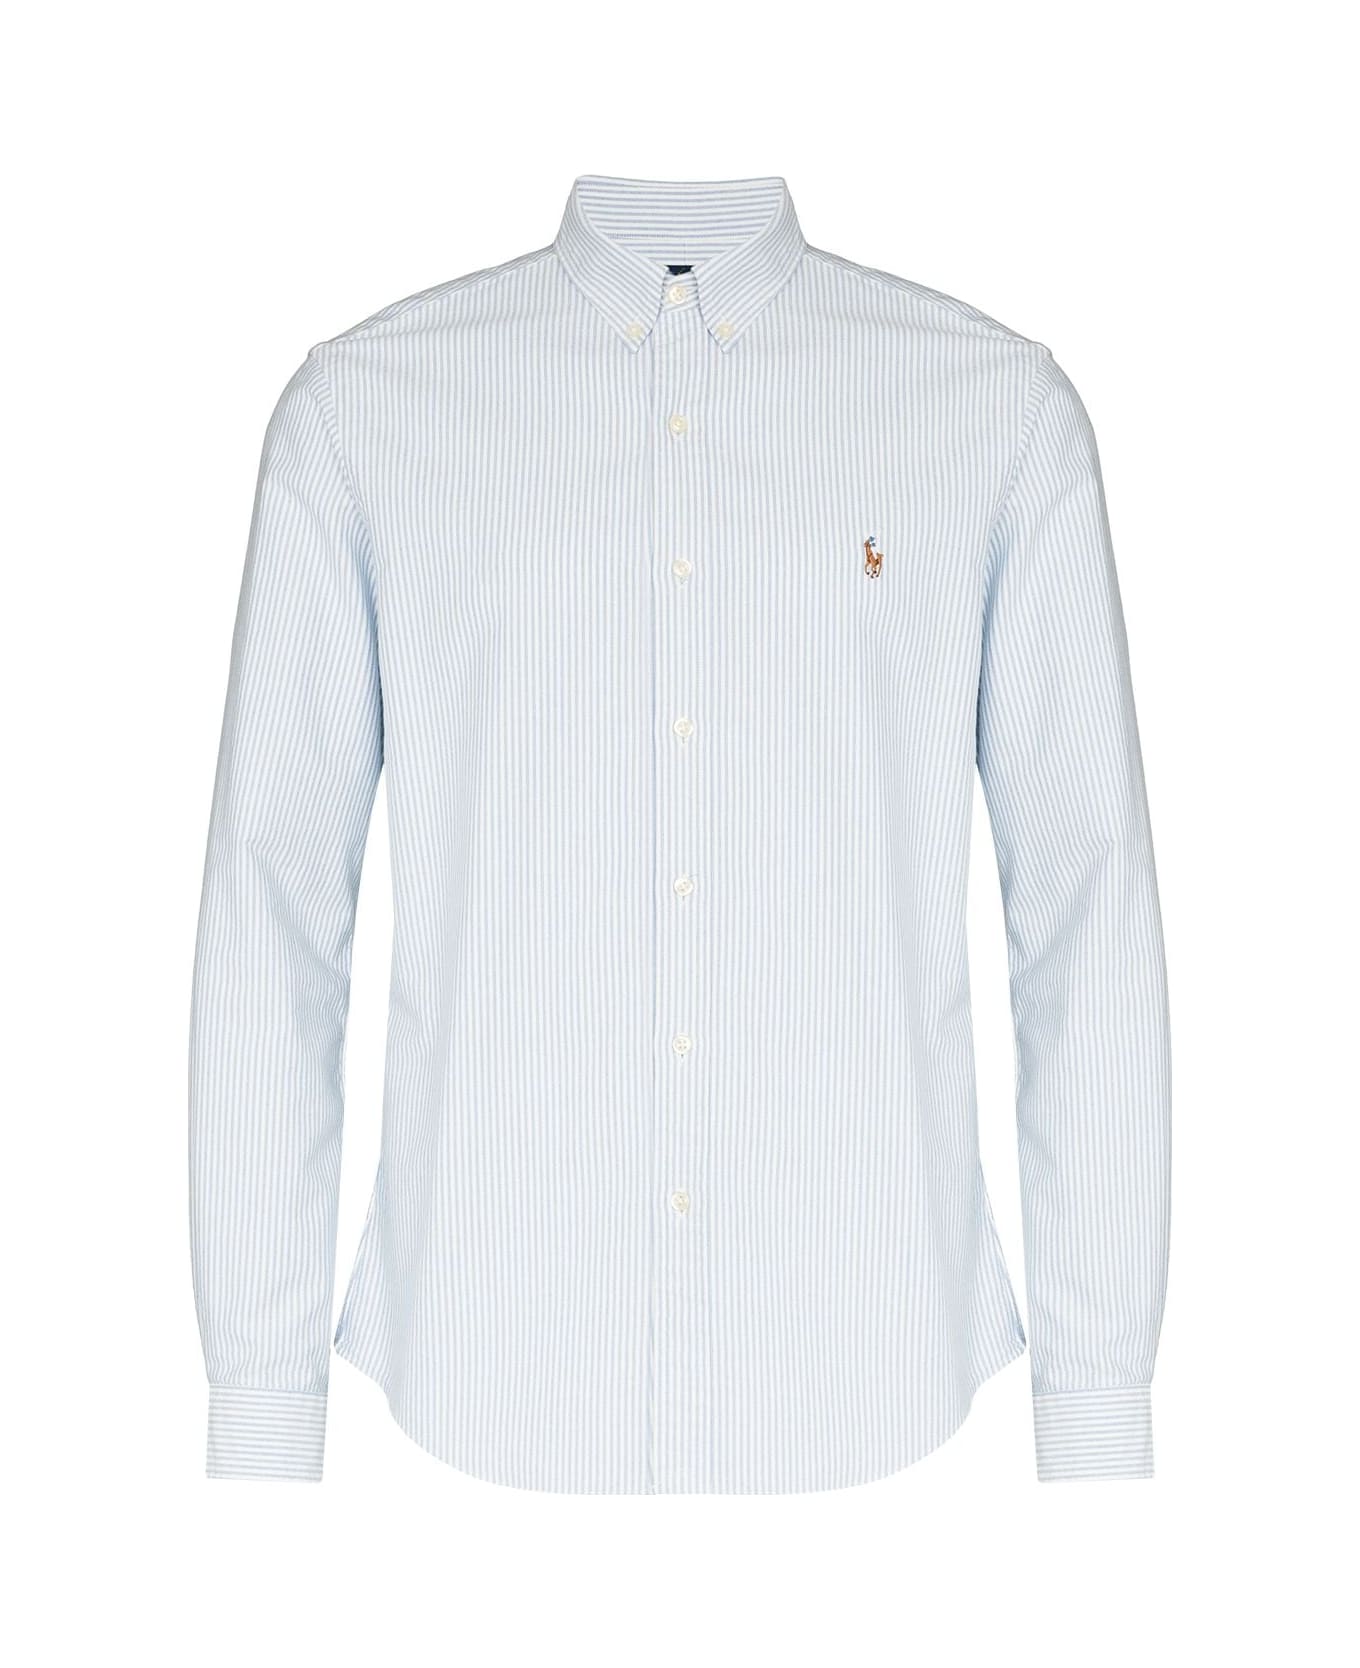 Polo Ralph Lauren Classic Oxford Long Sleeve Sport Shirt - Bsr Blue White